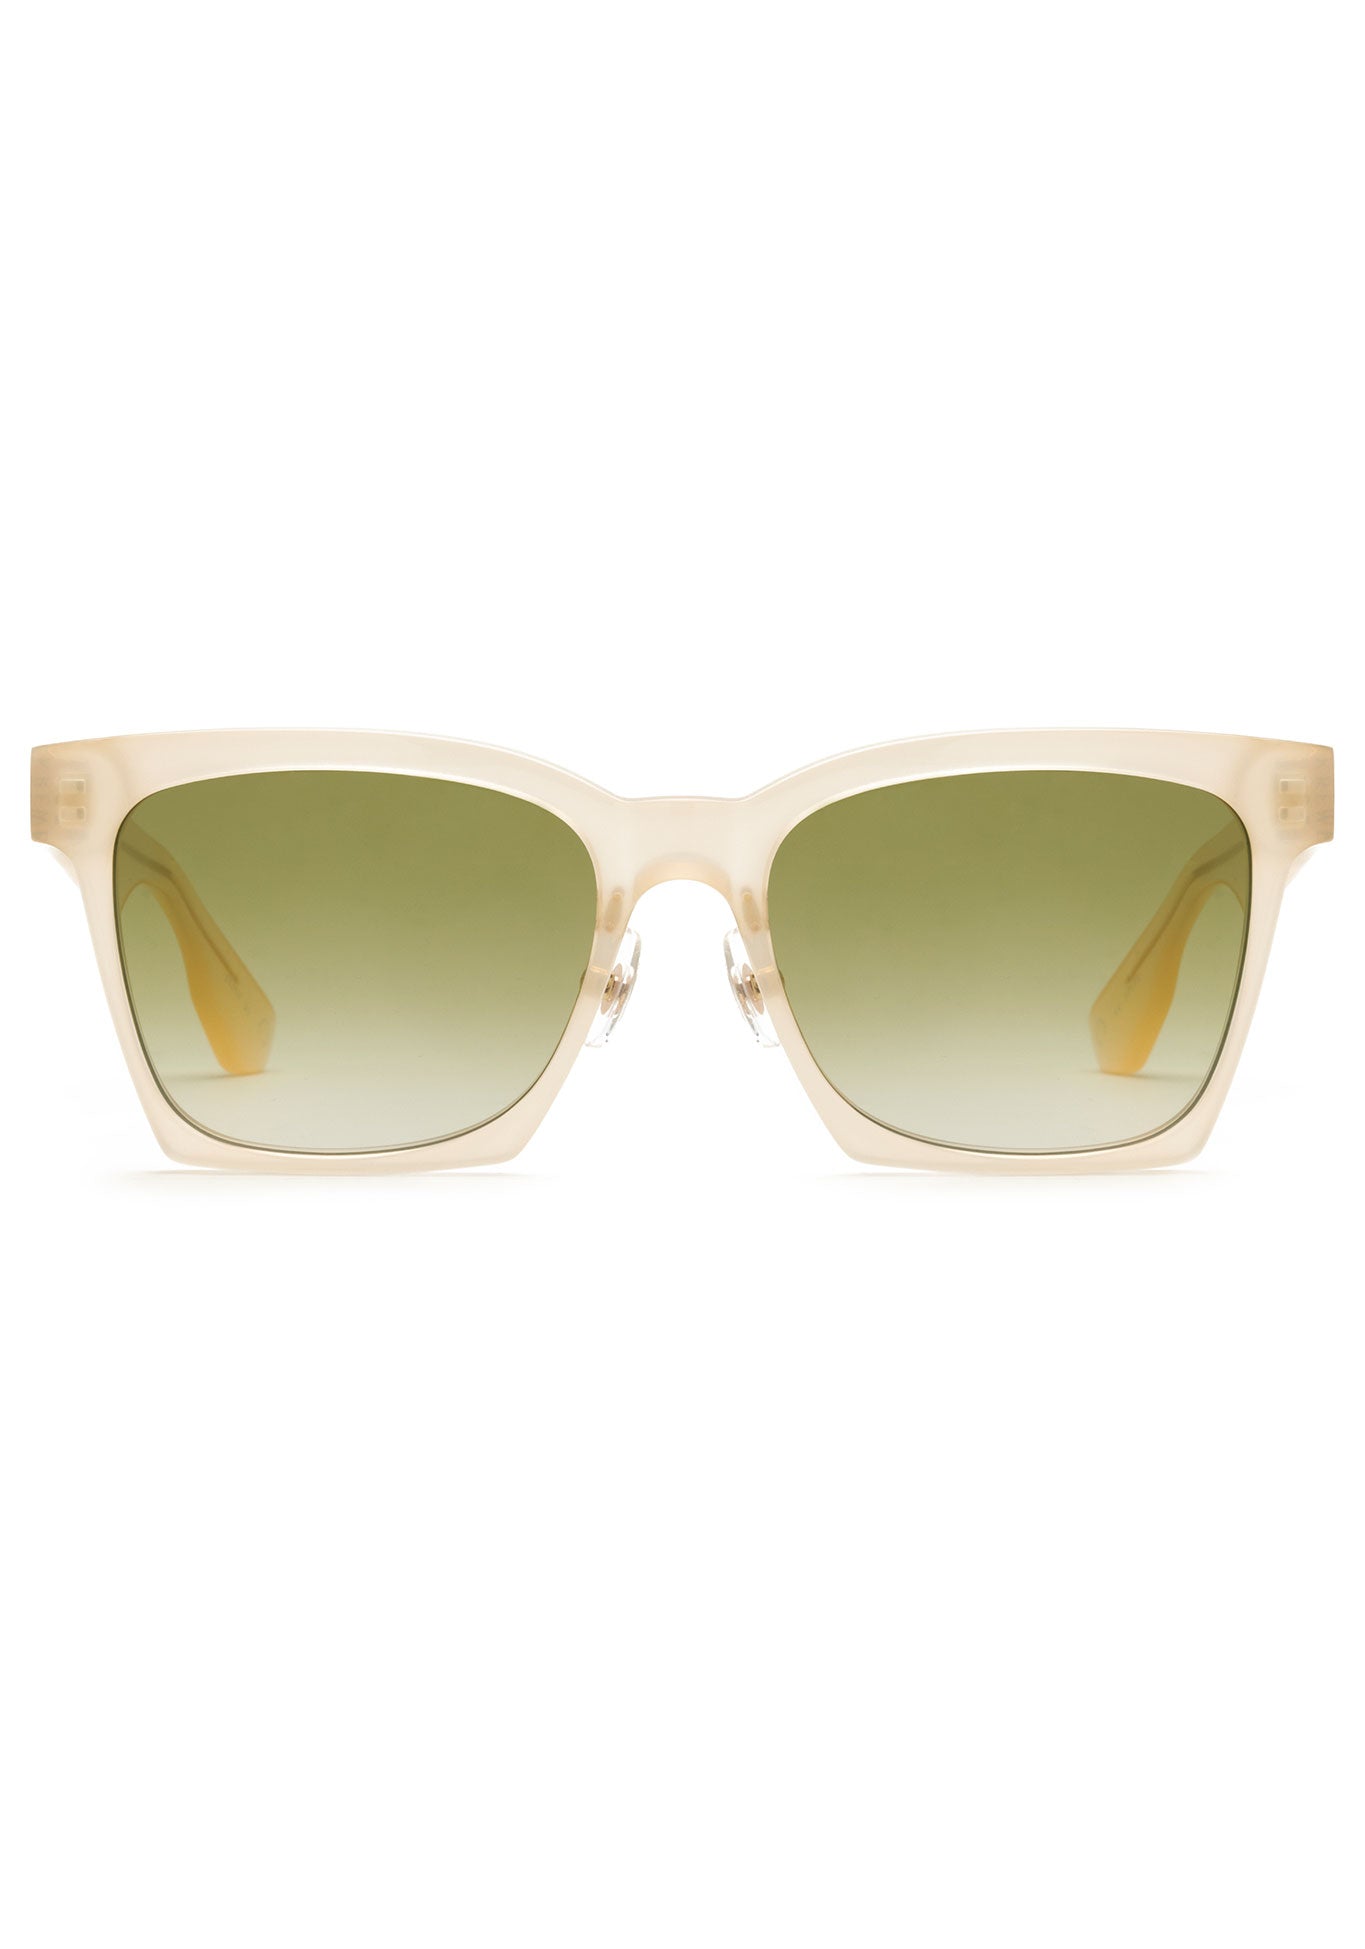 KREWE EYEGLASSES - FOSTER | Blonde + Custom Vanity Tint Handcrafted, luxury oversized glasses with custom green gradient tinted lenses